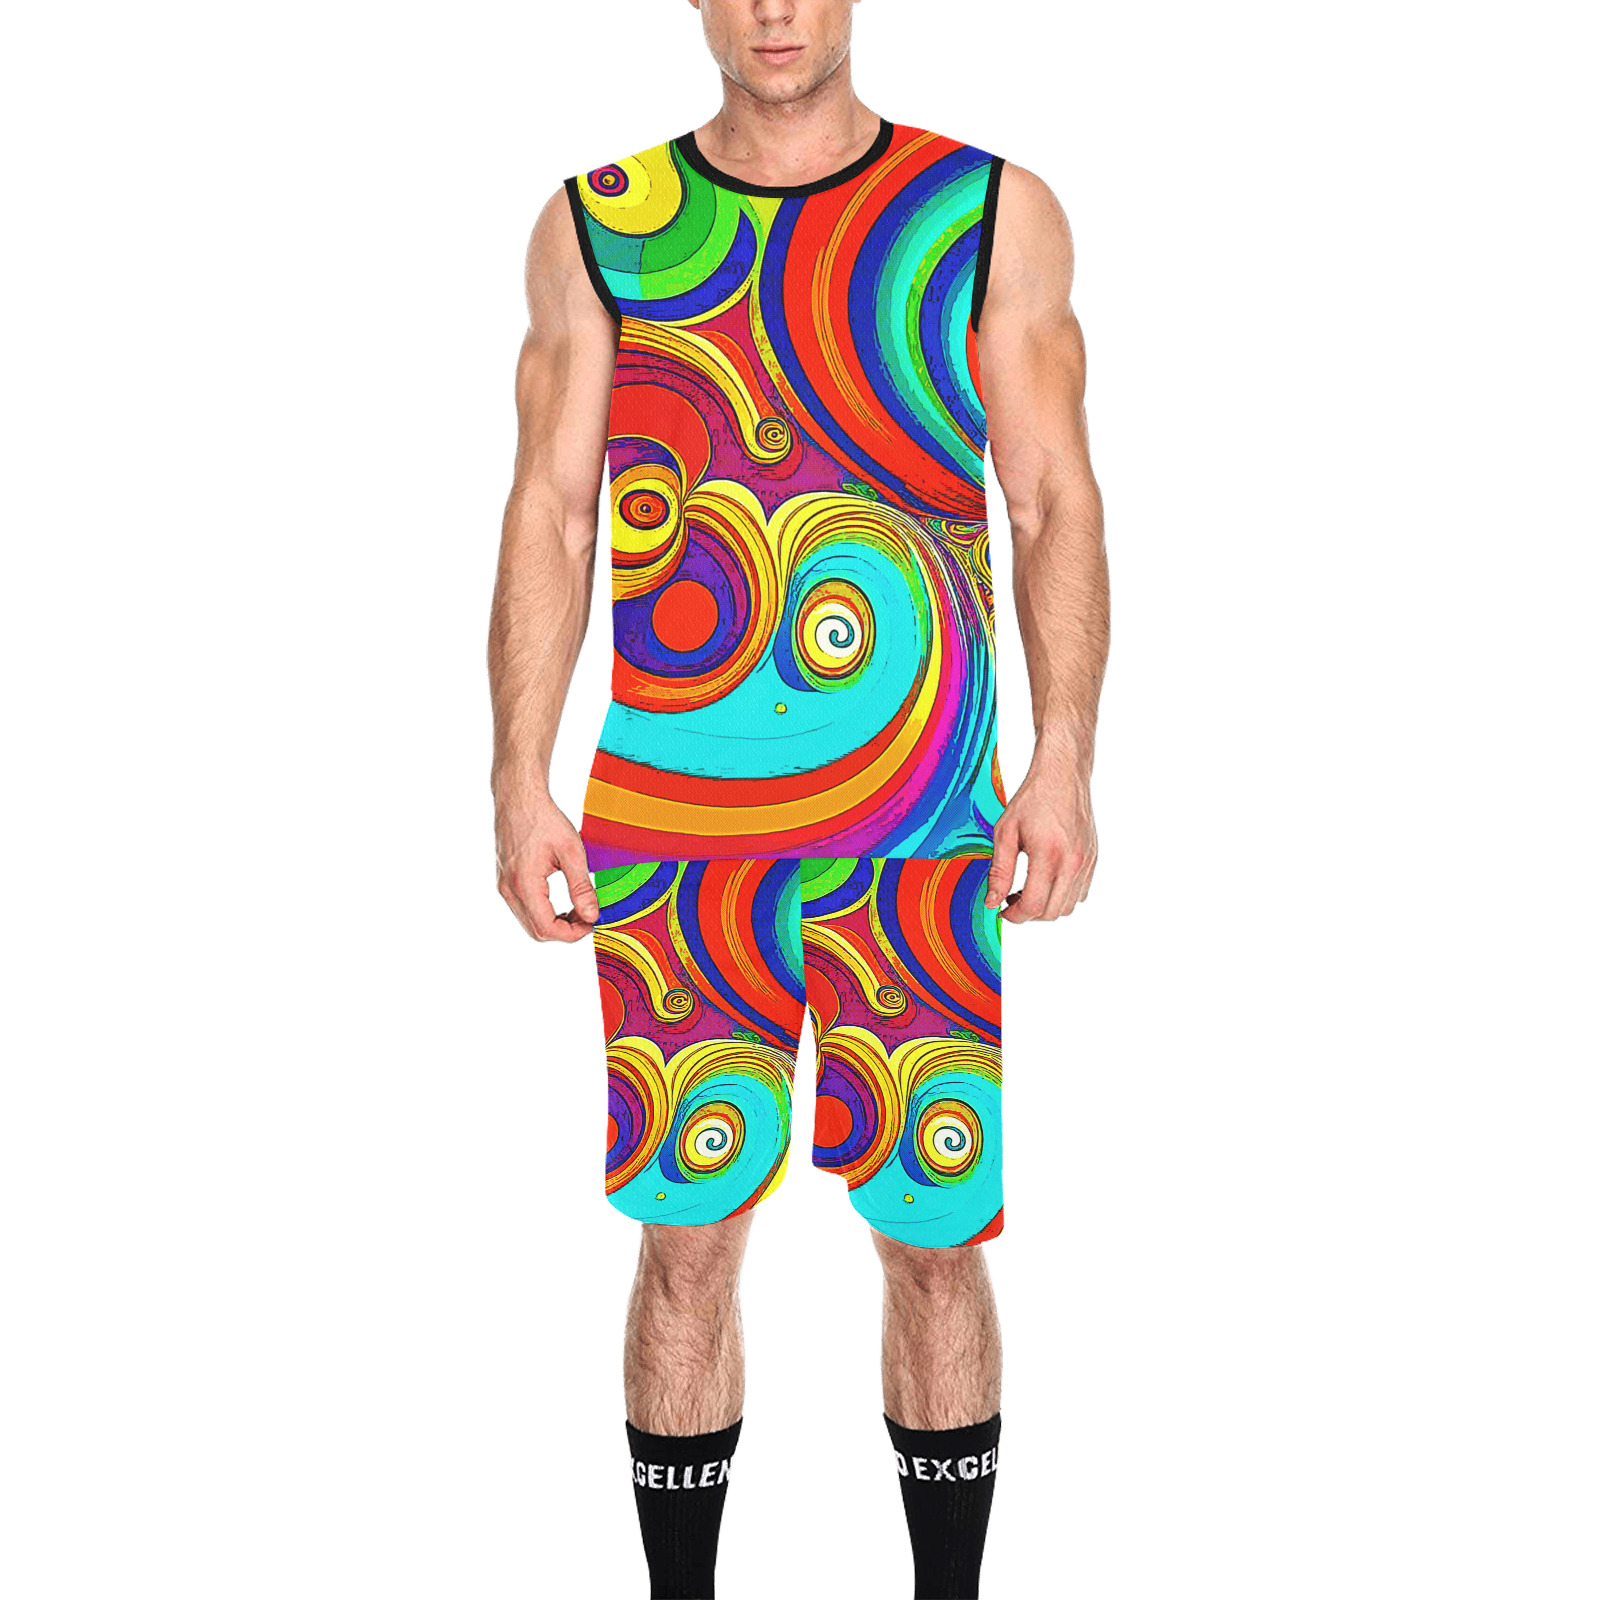 Colorful Groovy Rainbow Swirls All Over Print Basketball Uniform